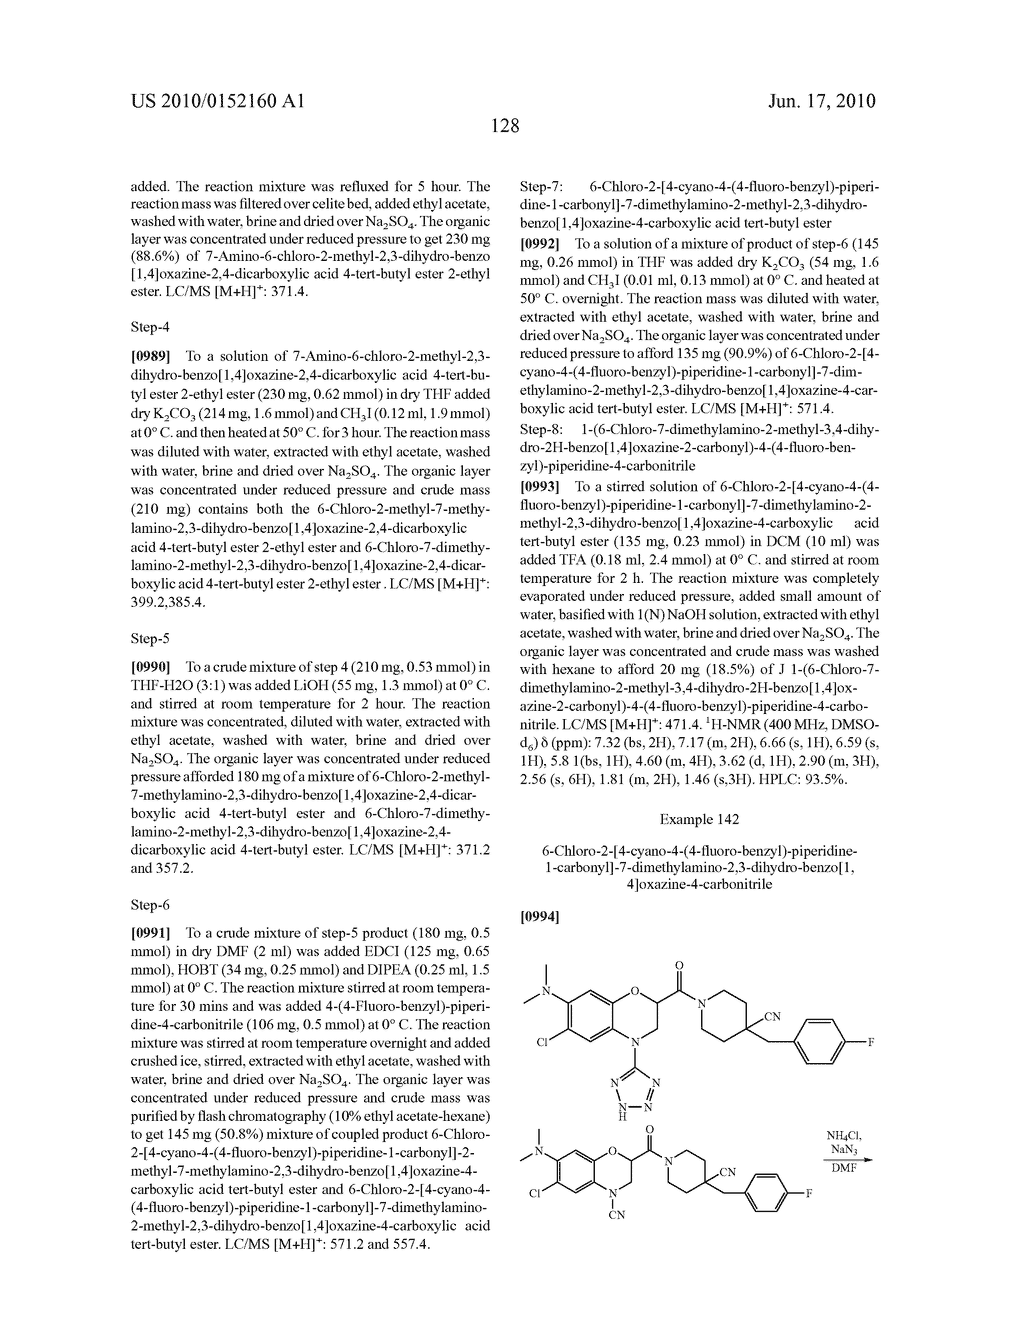 NOVEL BENZODIOXANE AND BENZOXAZINE DERIVATIVES USEFUL AS CC CHEMOKINE RECEPTOR LIGANDS - diagram, schematic, and image 129